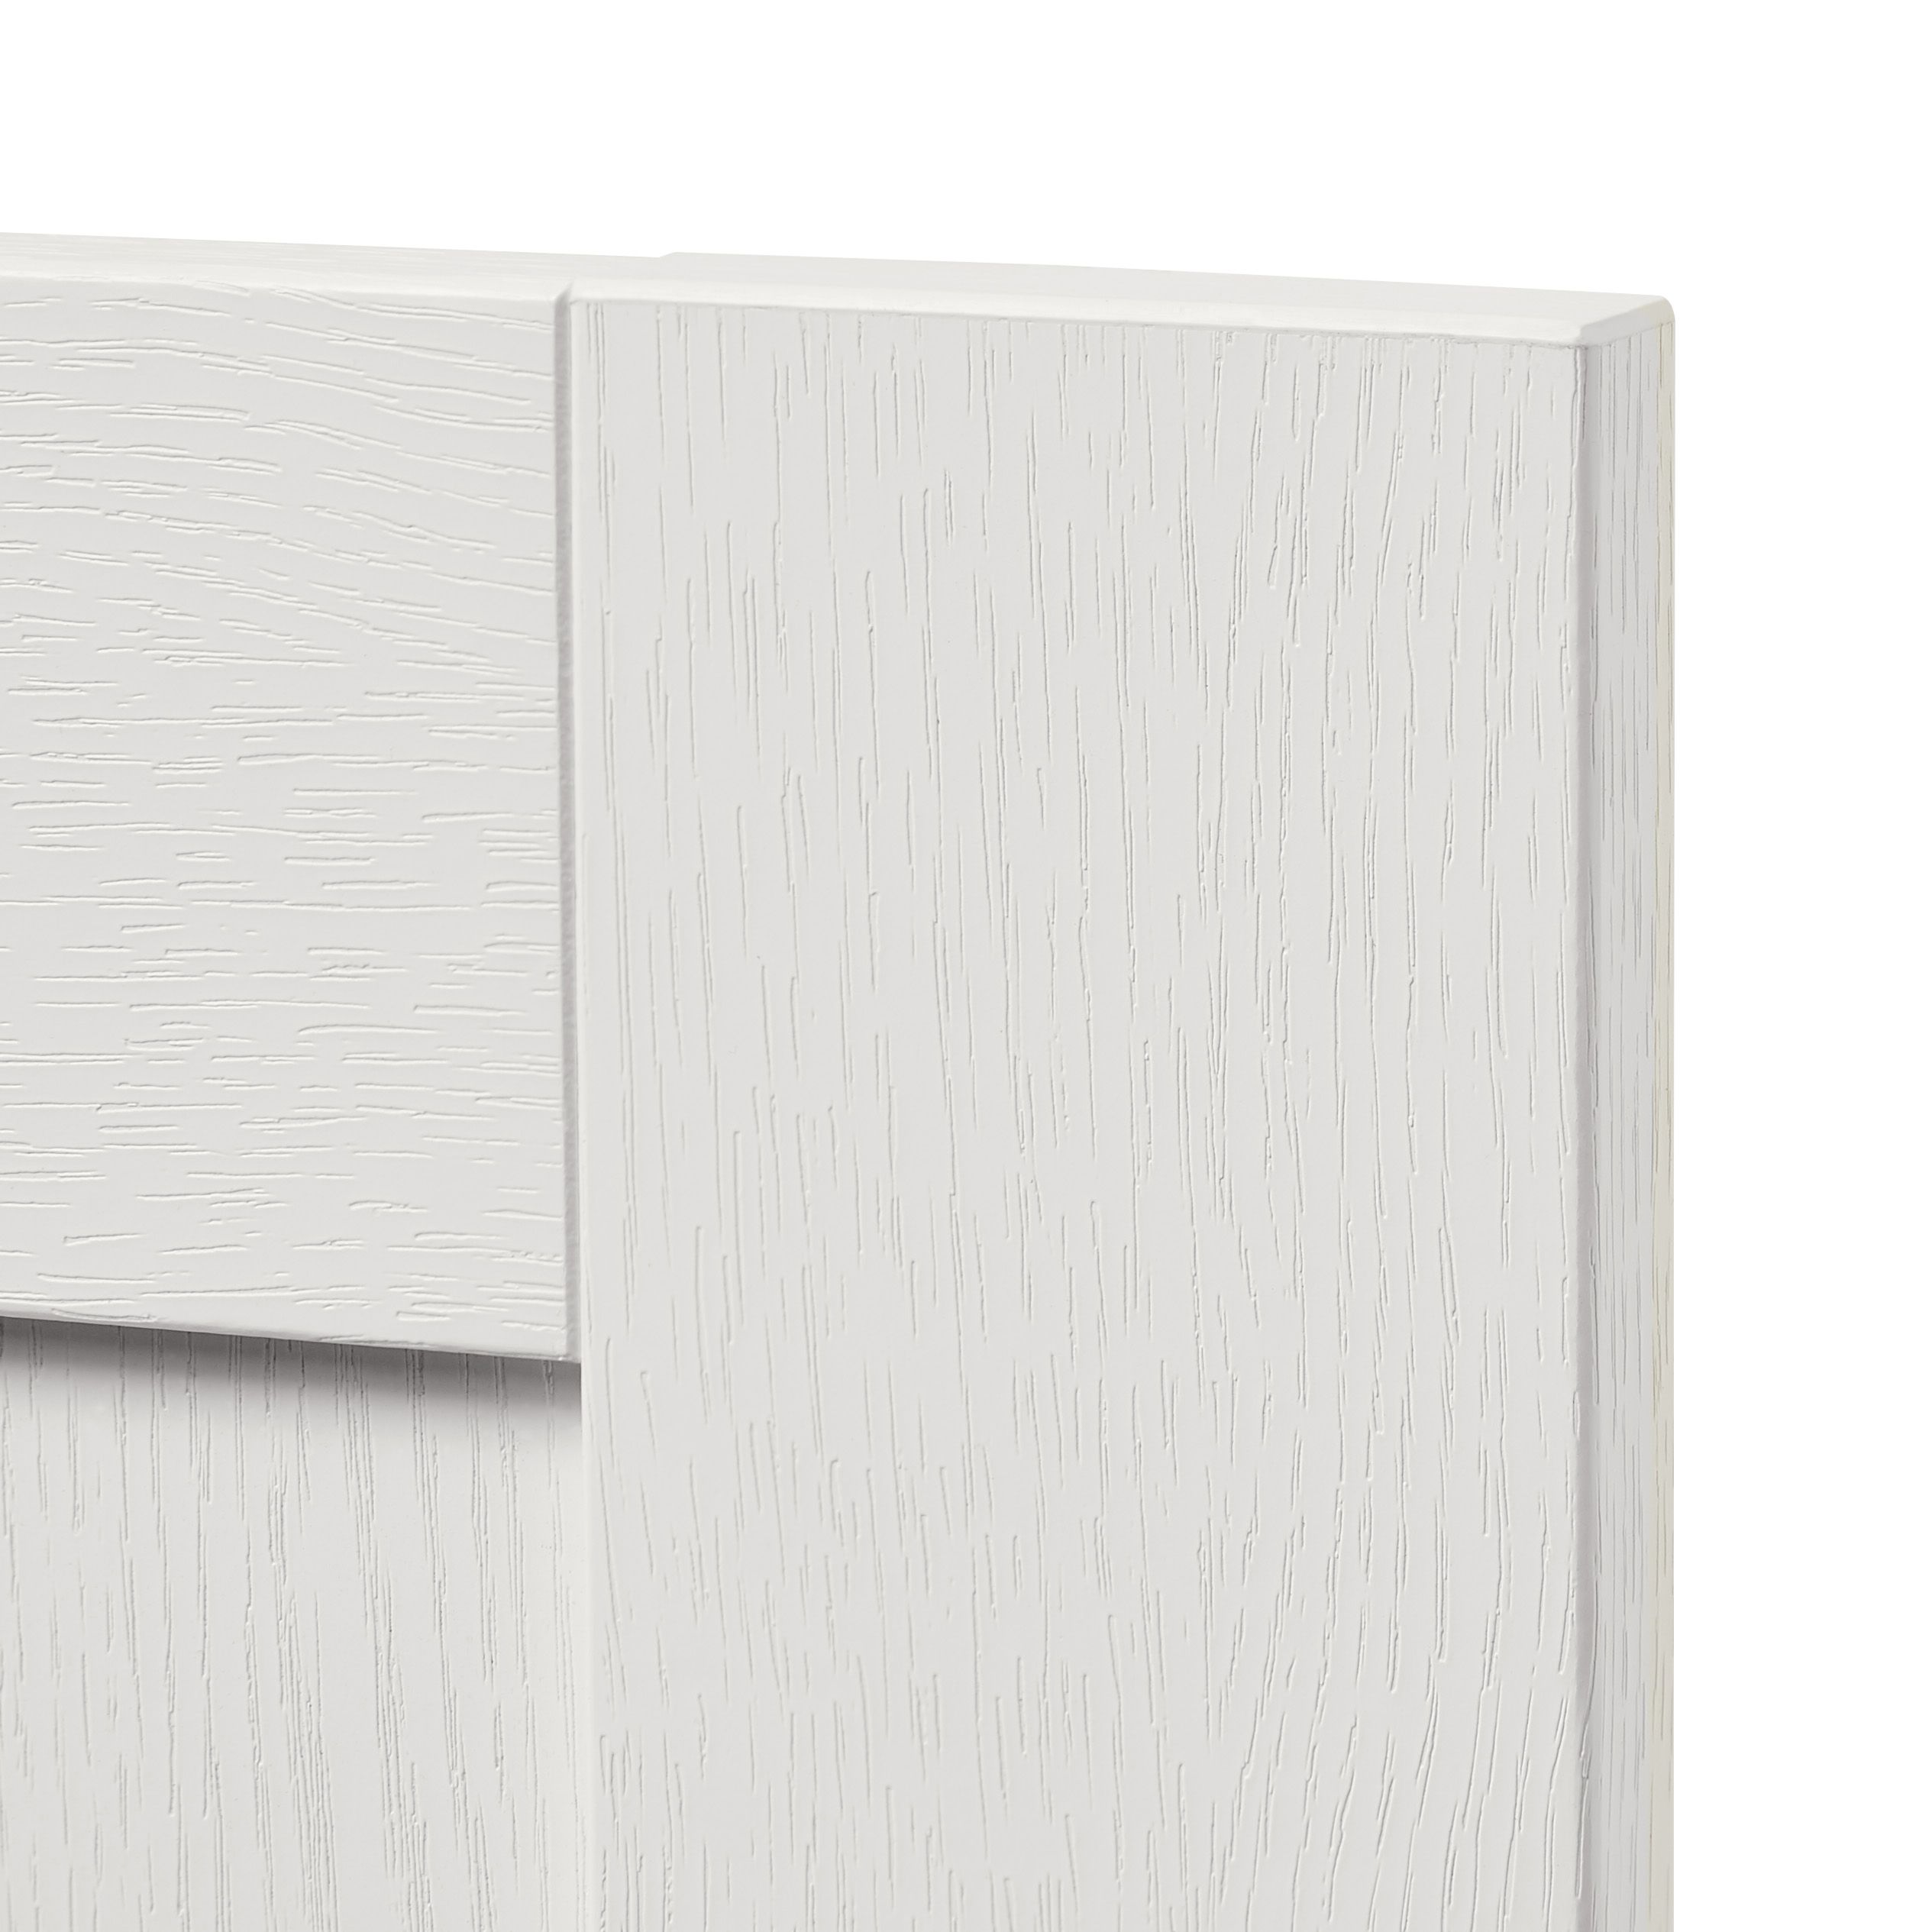 GoodHome Alpinia Matt ivory painted wood effect shaker Appliance Cabinet door (W)600mm (H)626mm (T)18mm